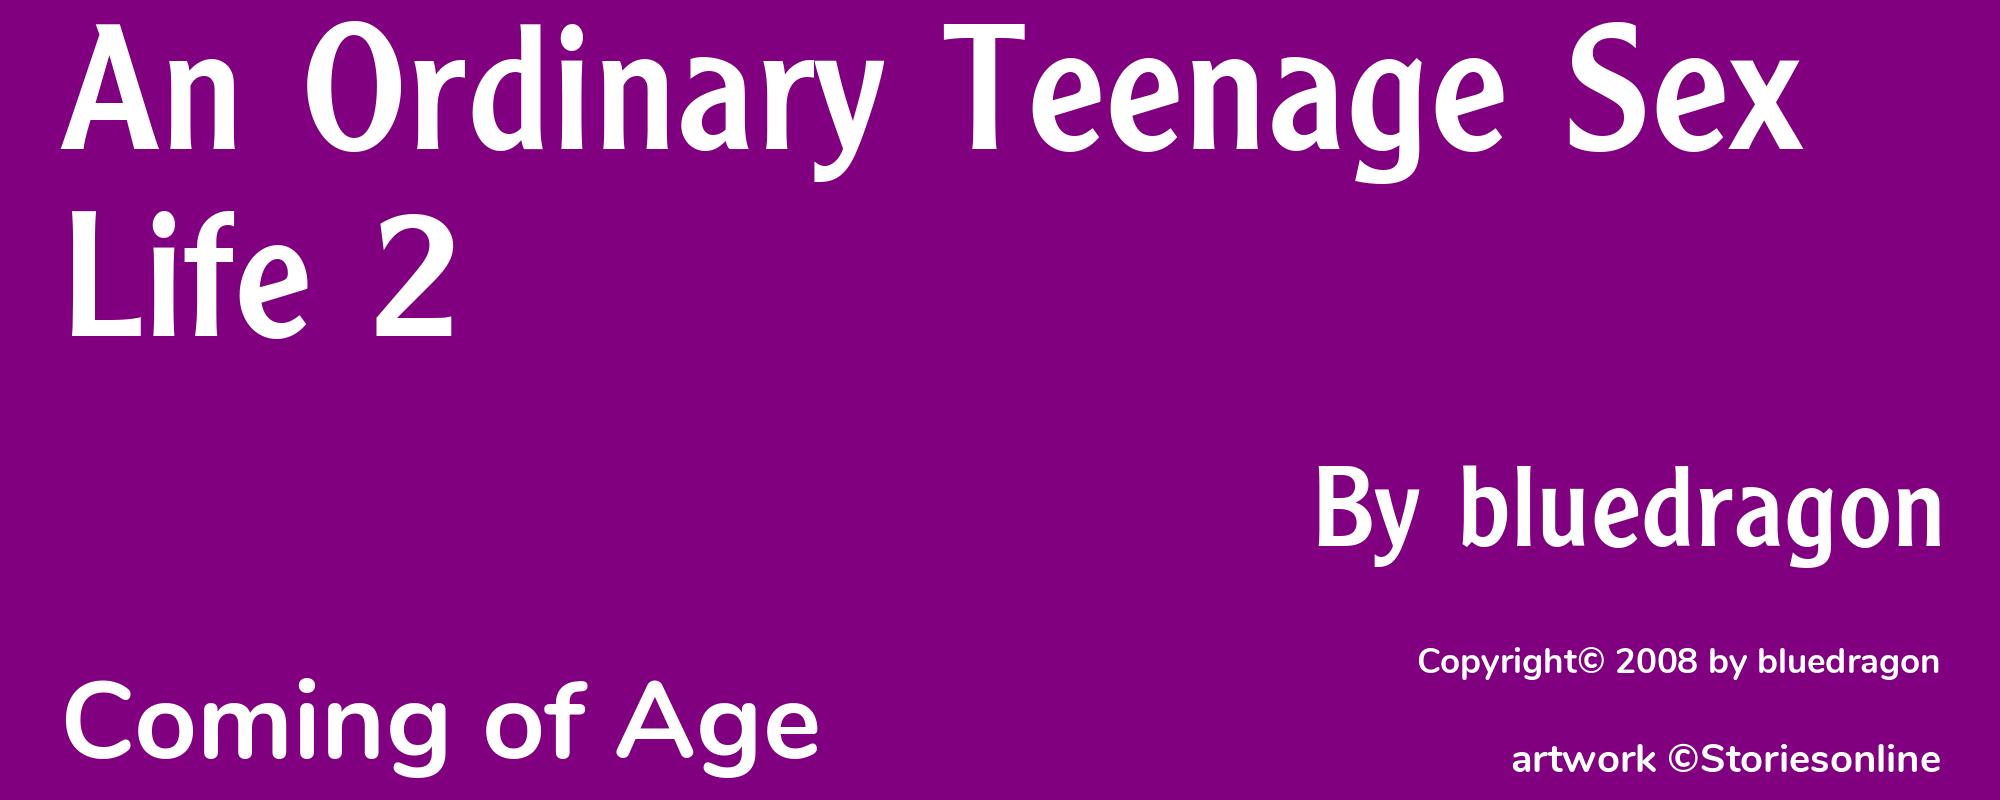 An Ordinary Teenage Sex Life 2 - Cover